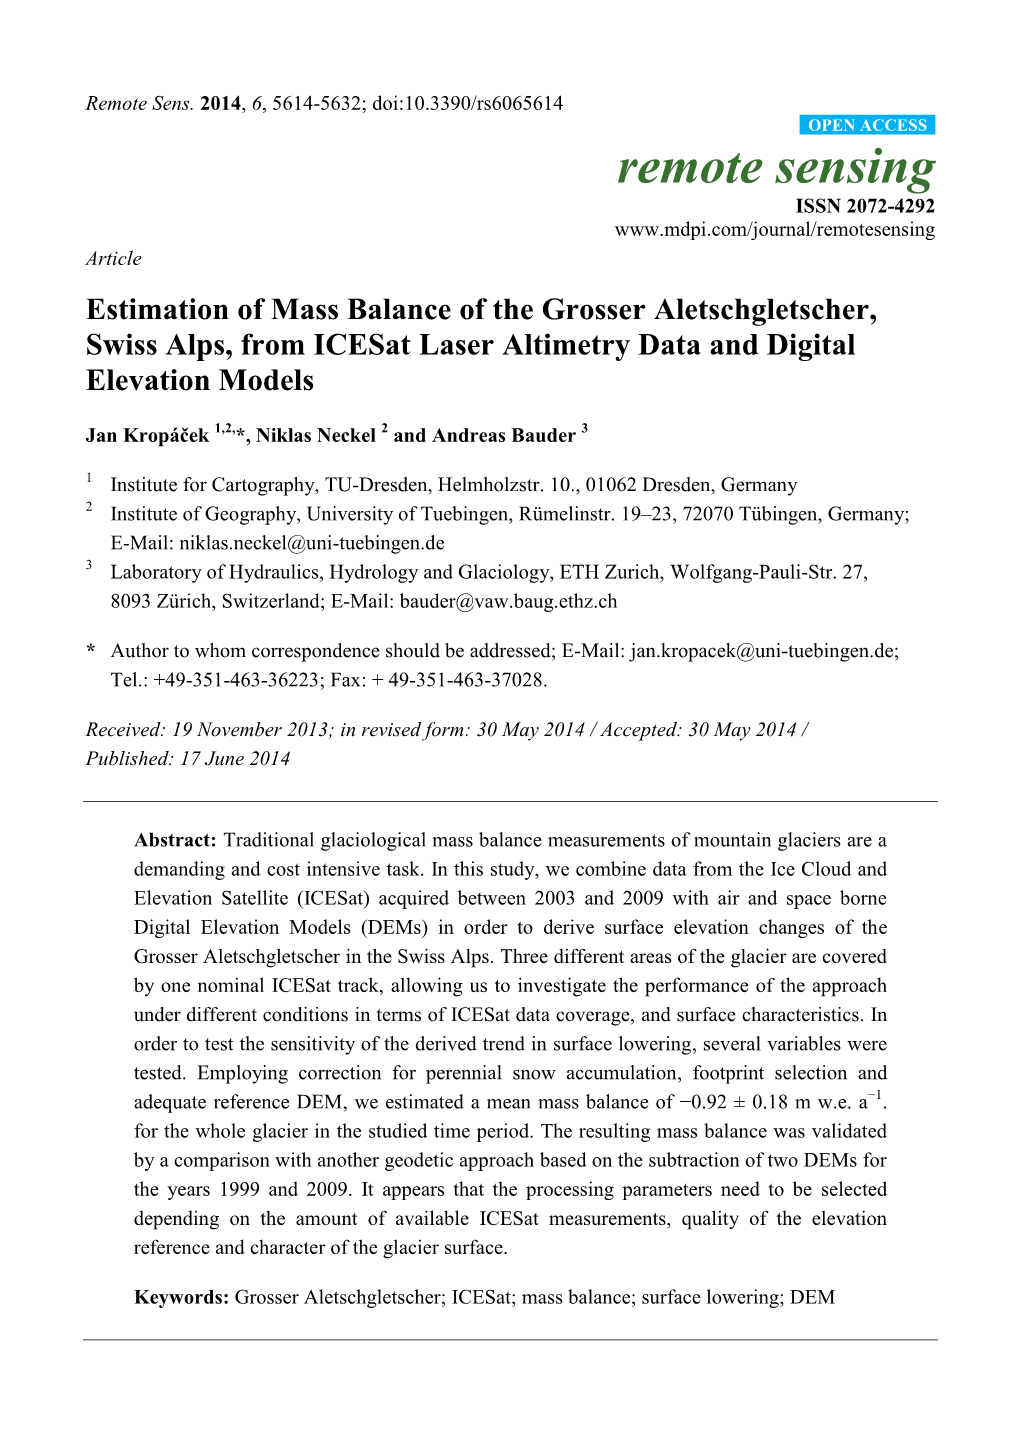 Estimation of Mass Balance of the Grosser Aletschgletscher, Swiss Alps, from Icesat Laser Altimetry Data and Digital Elevation Models